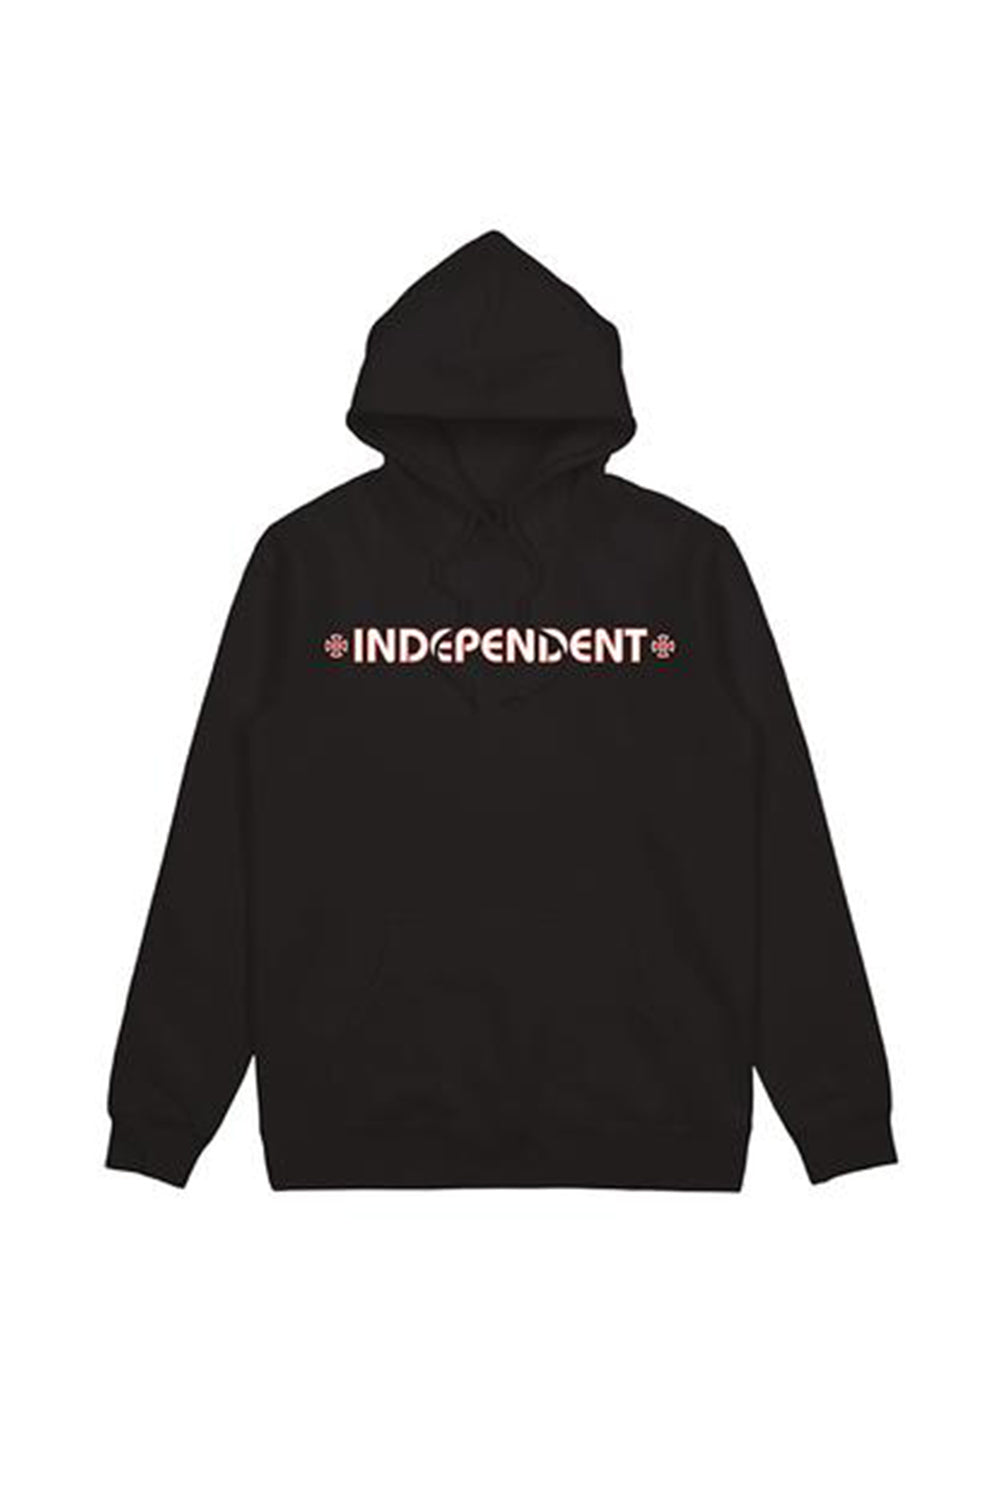 Independent Bar Cross Youth Pop Hood - Black